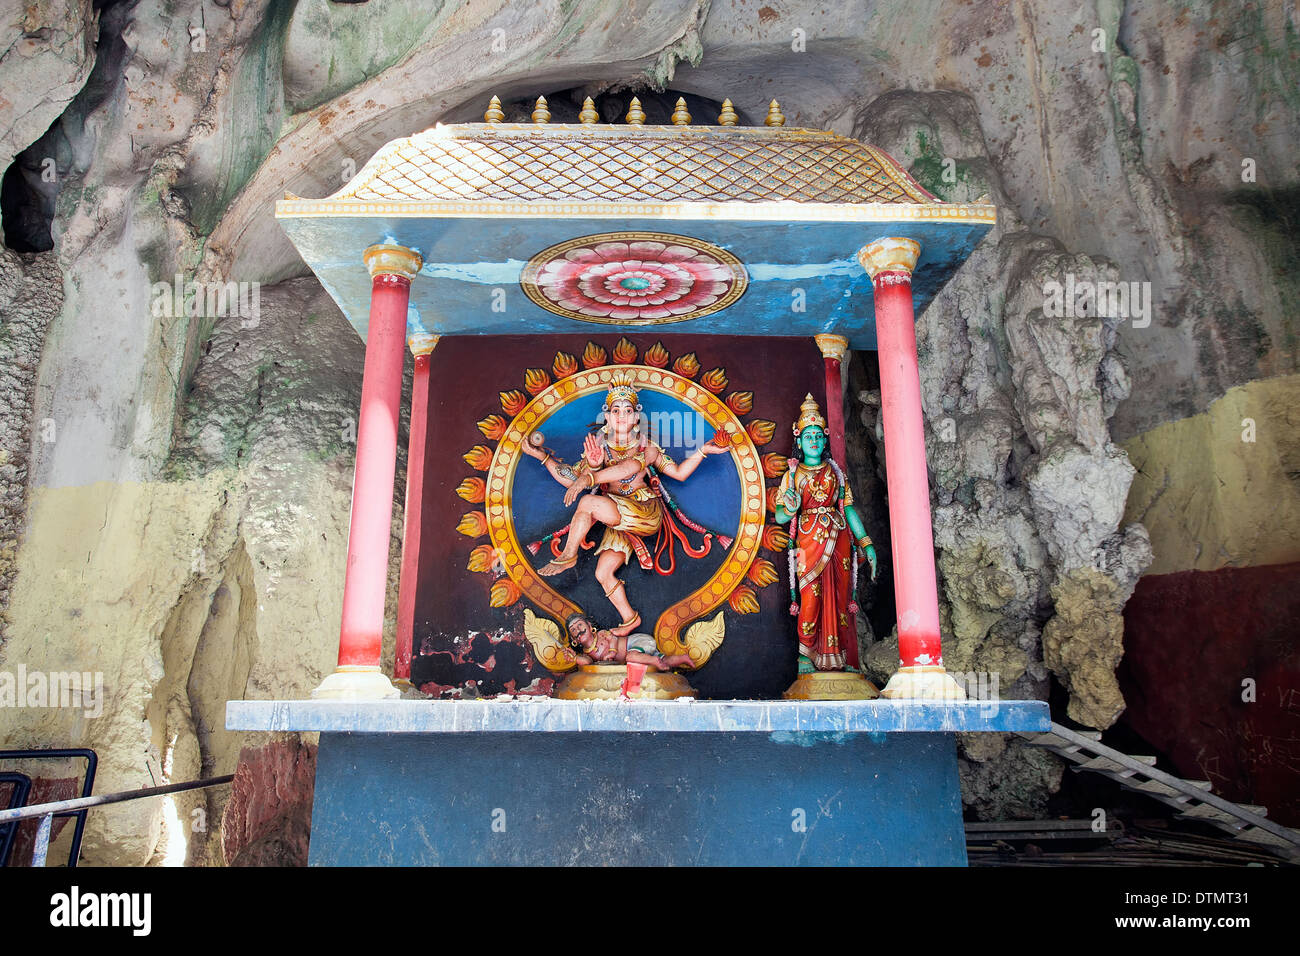 Shrine with Statue of Indian Hindu Dancing God Shiva Nataraja at Batu Caves in Malaysia Stock Photo